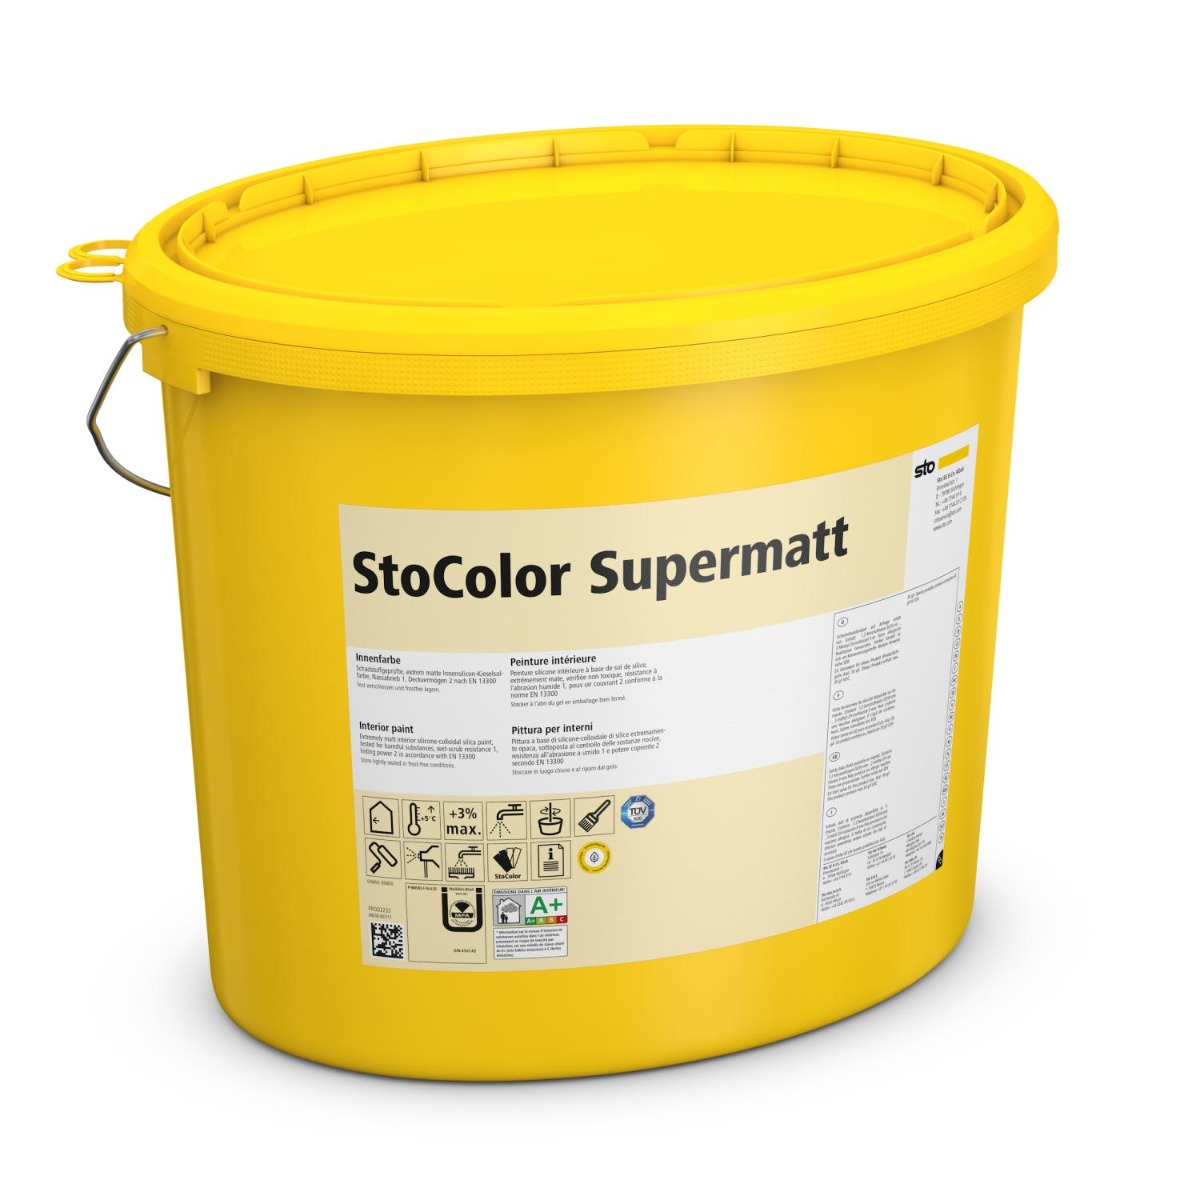 StoColor Supermatt-Farbtonklasse III 5 Liter-5 Liter Eimer